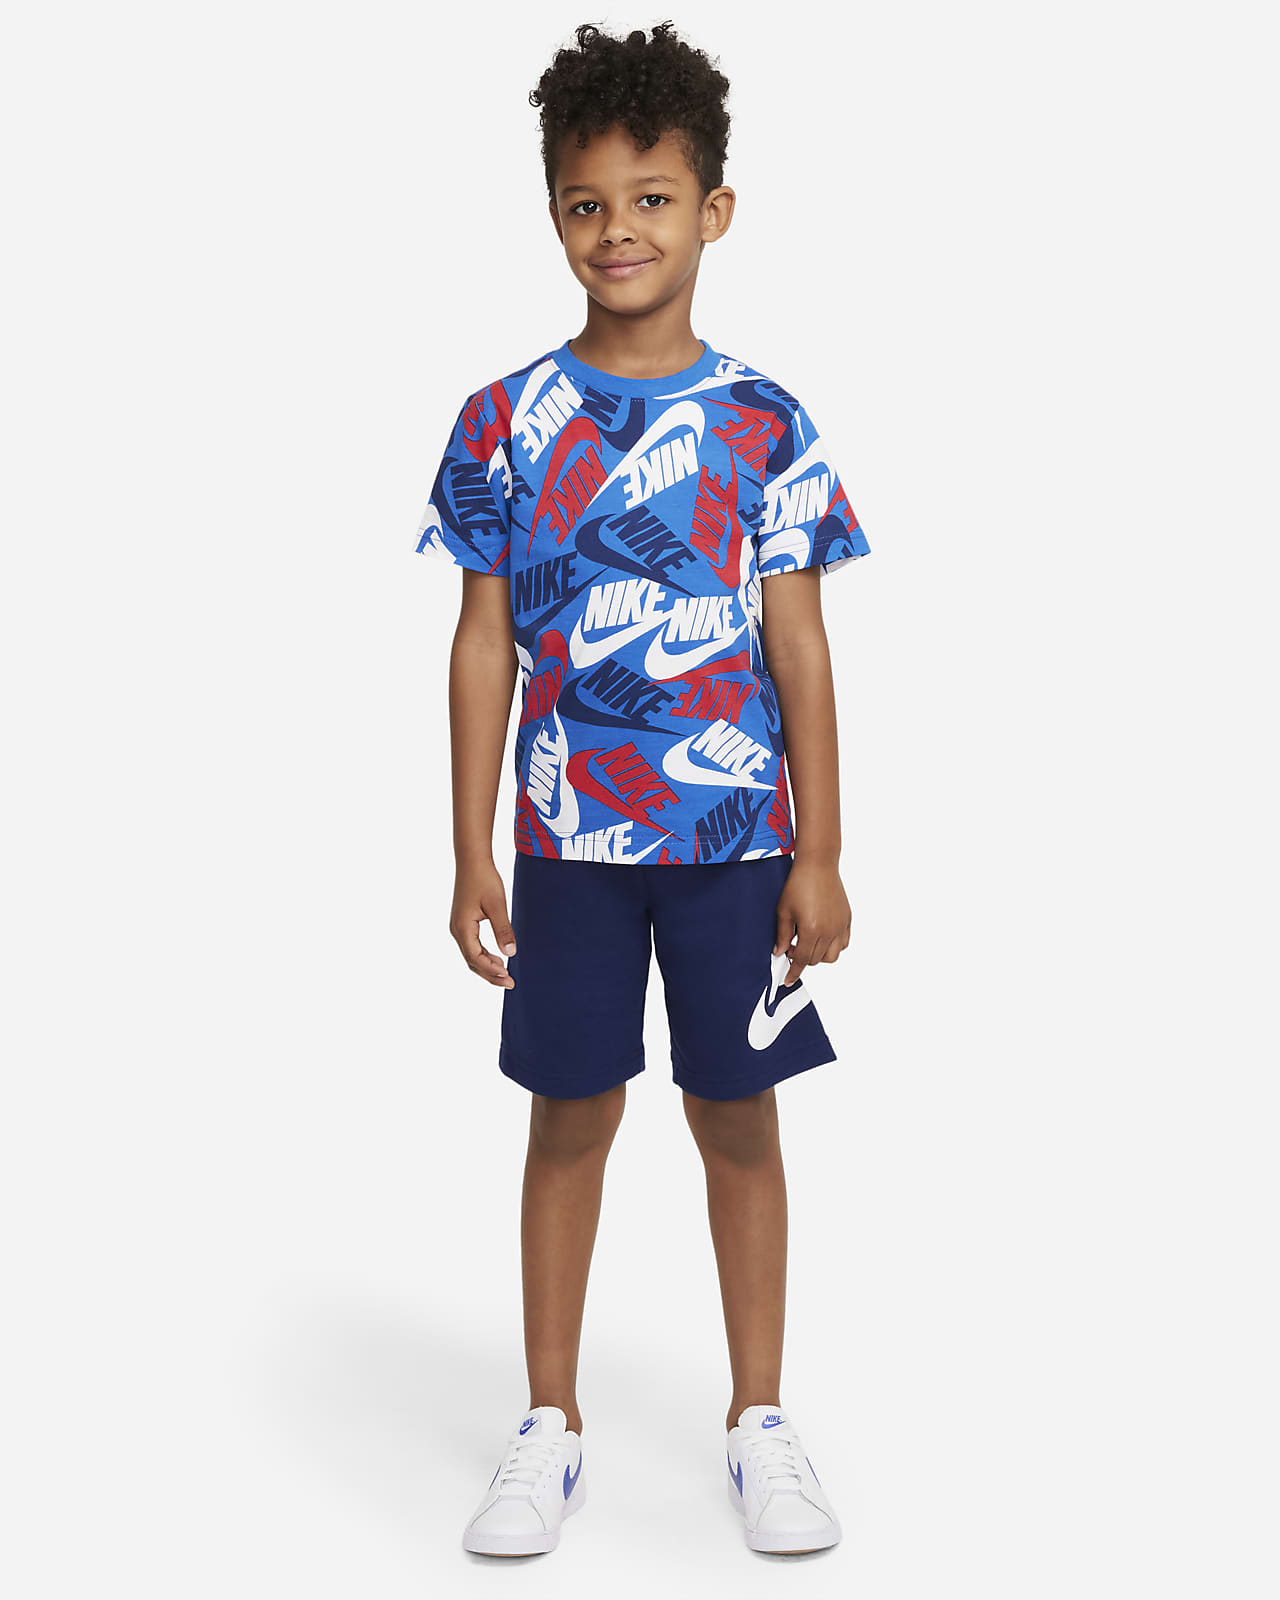 Ensemble t-shirt et short Nike Sportswear pour enfant